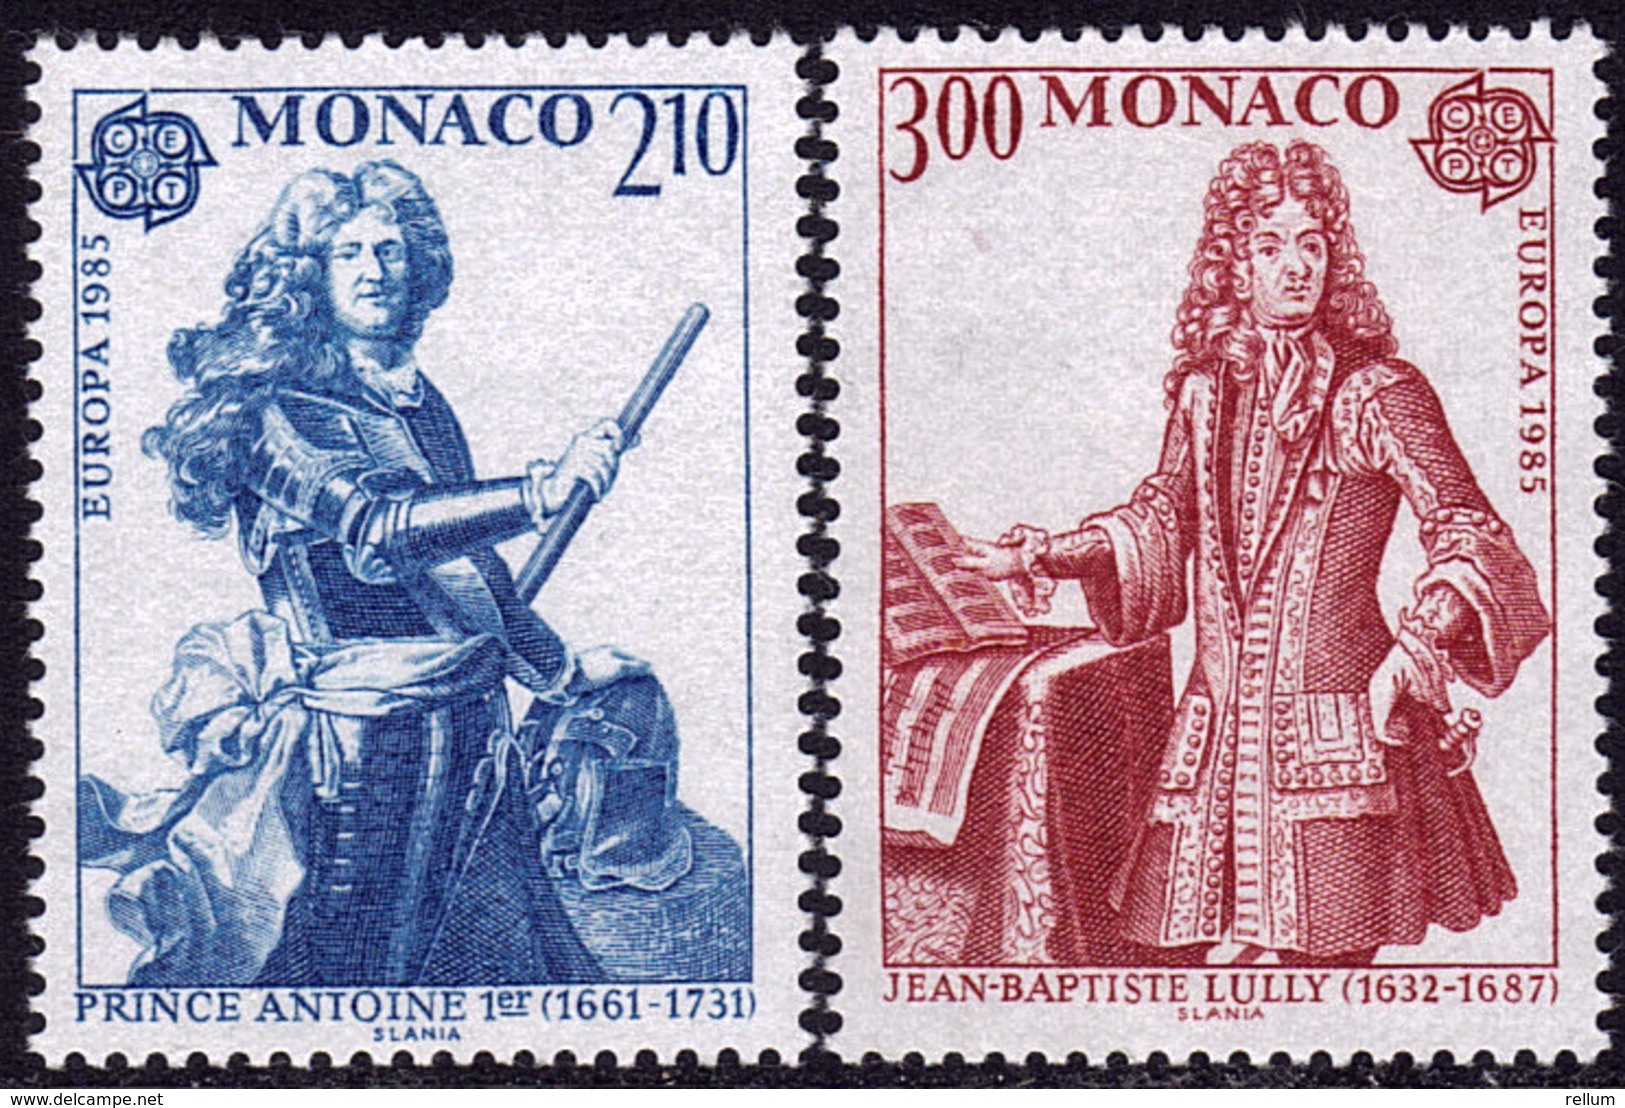 Monaco - Europa CEPT 1985 - Yvert Nr. 1459/1460 - Michel Nr. 1681/1682  ** - 1985